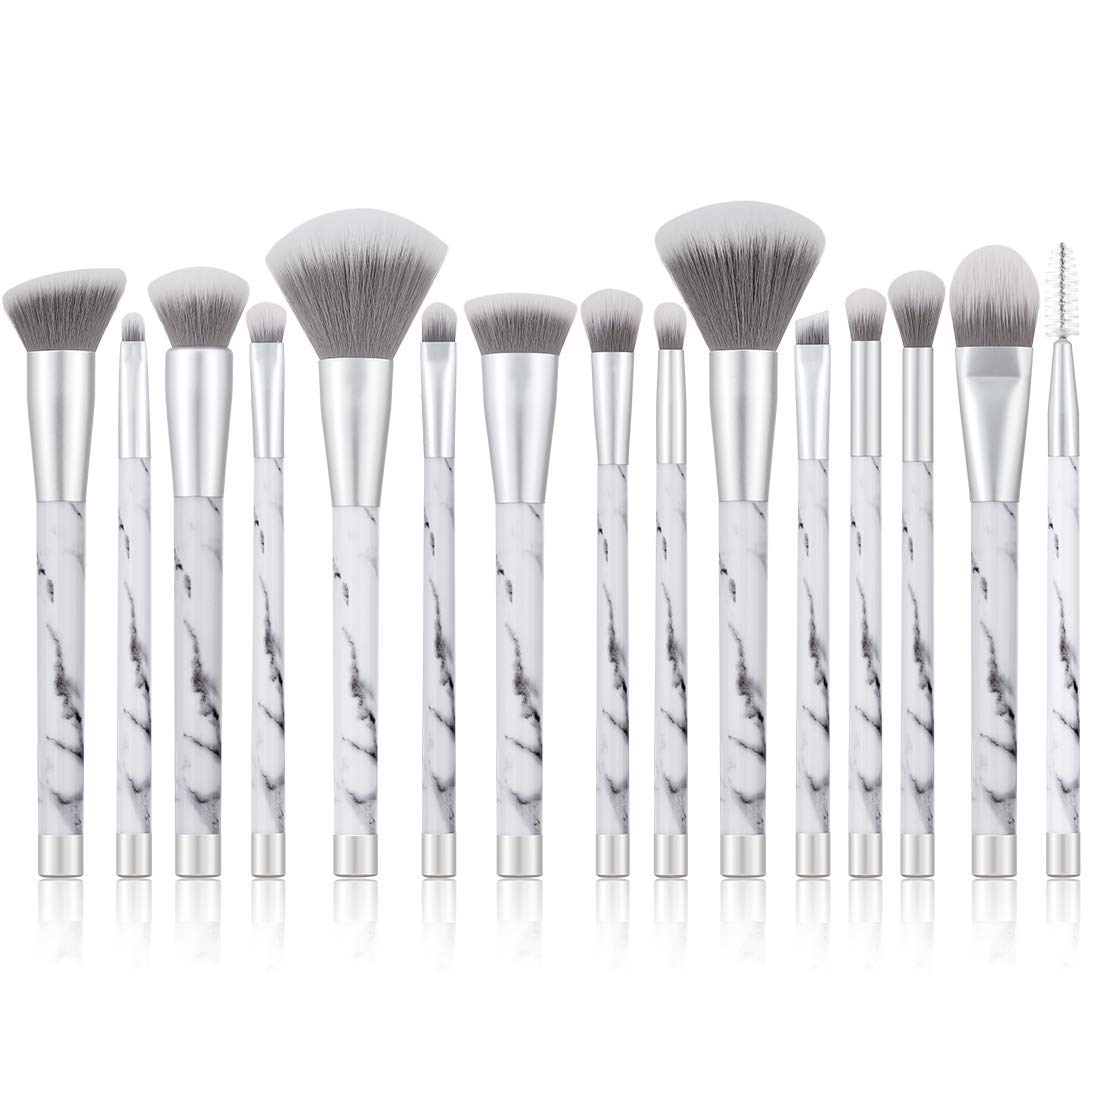 Chanel Lip Brush Makeup Brushes & Tools